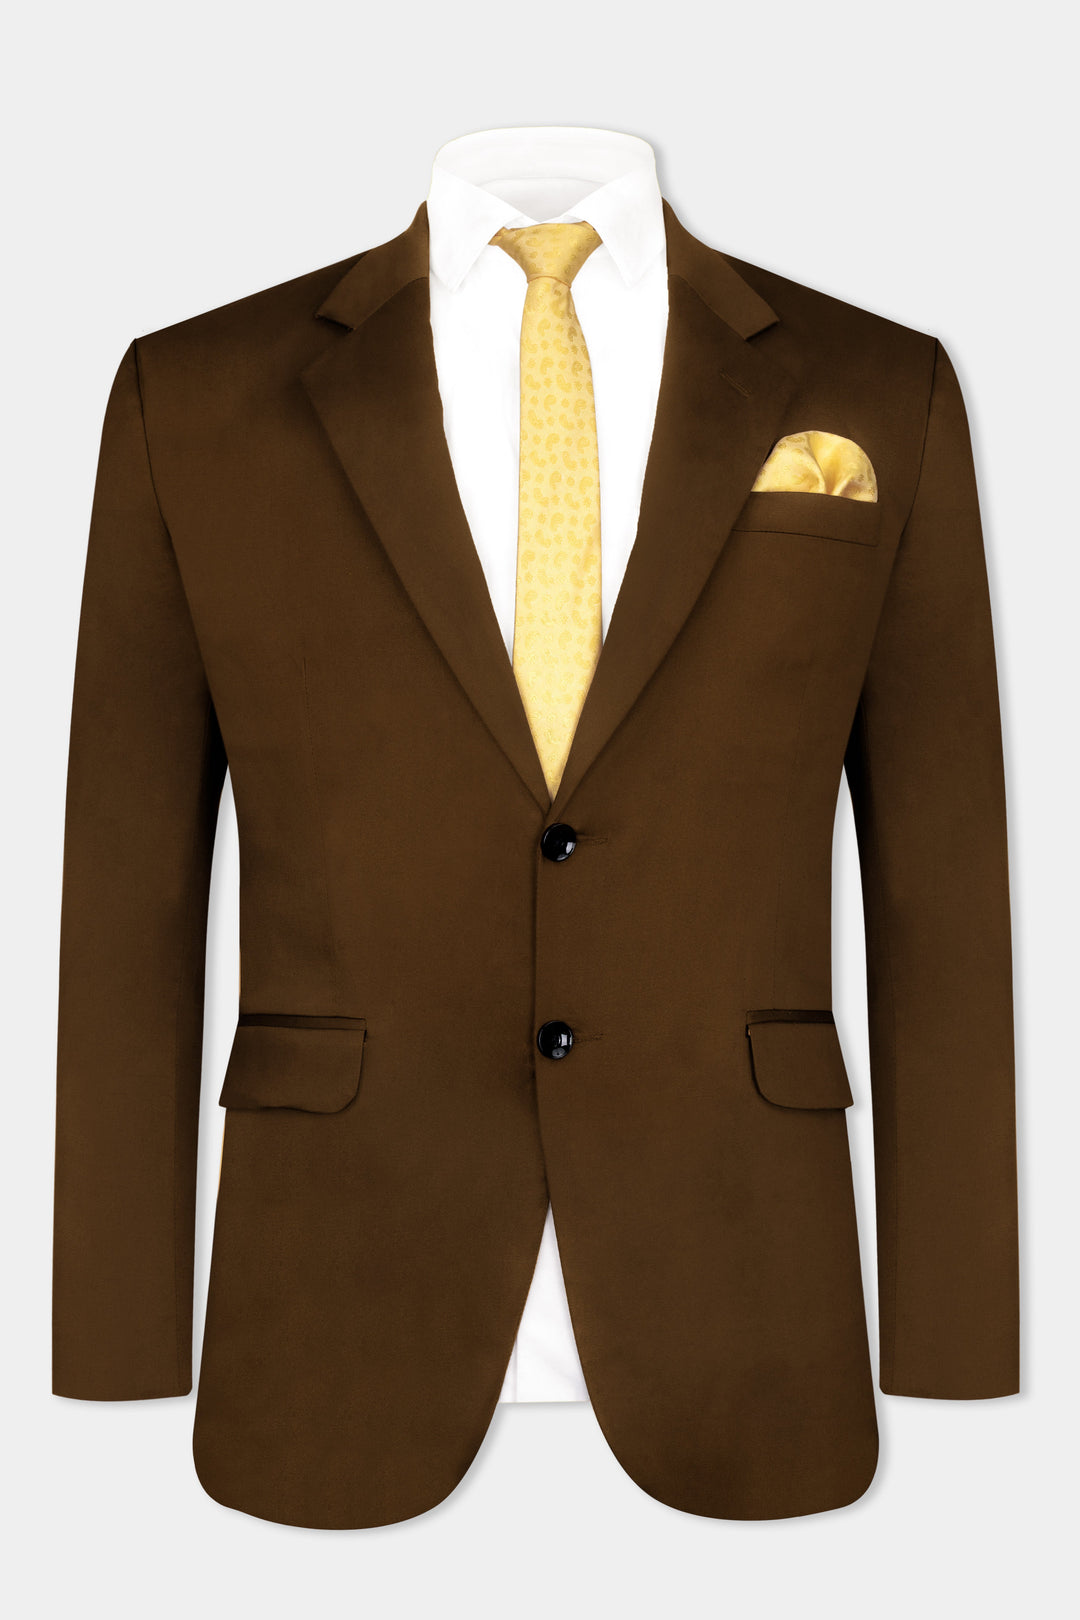 Brown Blazer Matching Shirt and Pants || Brown Blazer Combination -  TiptopGents